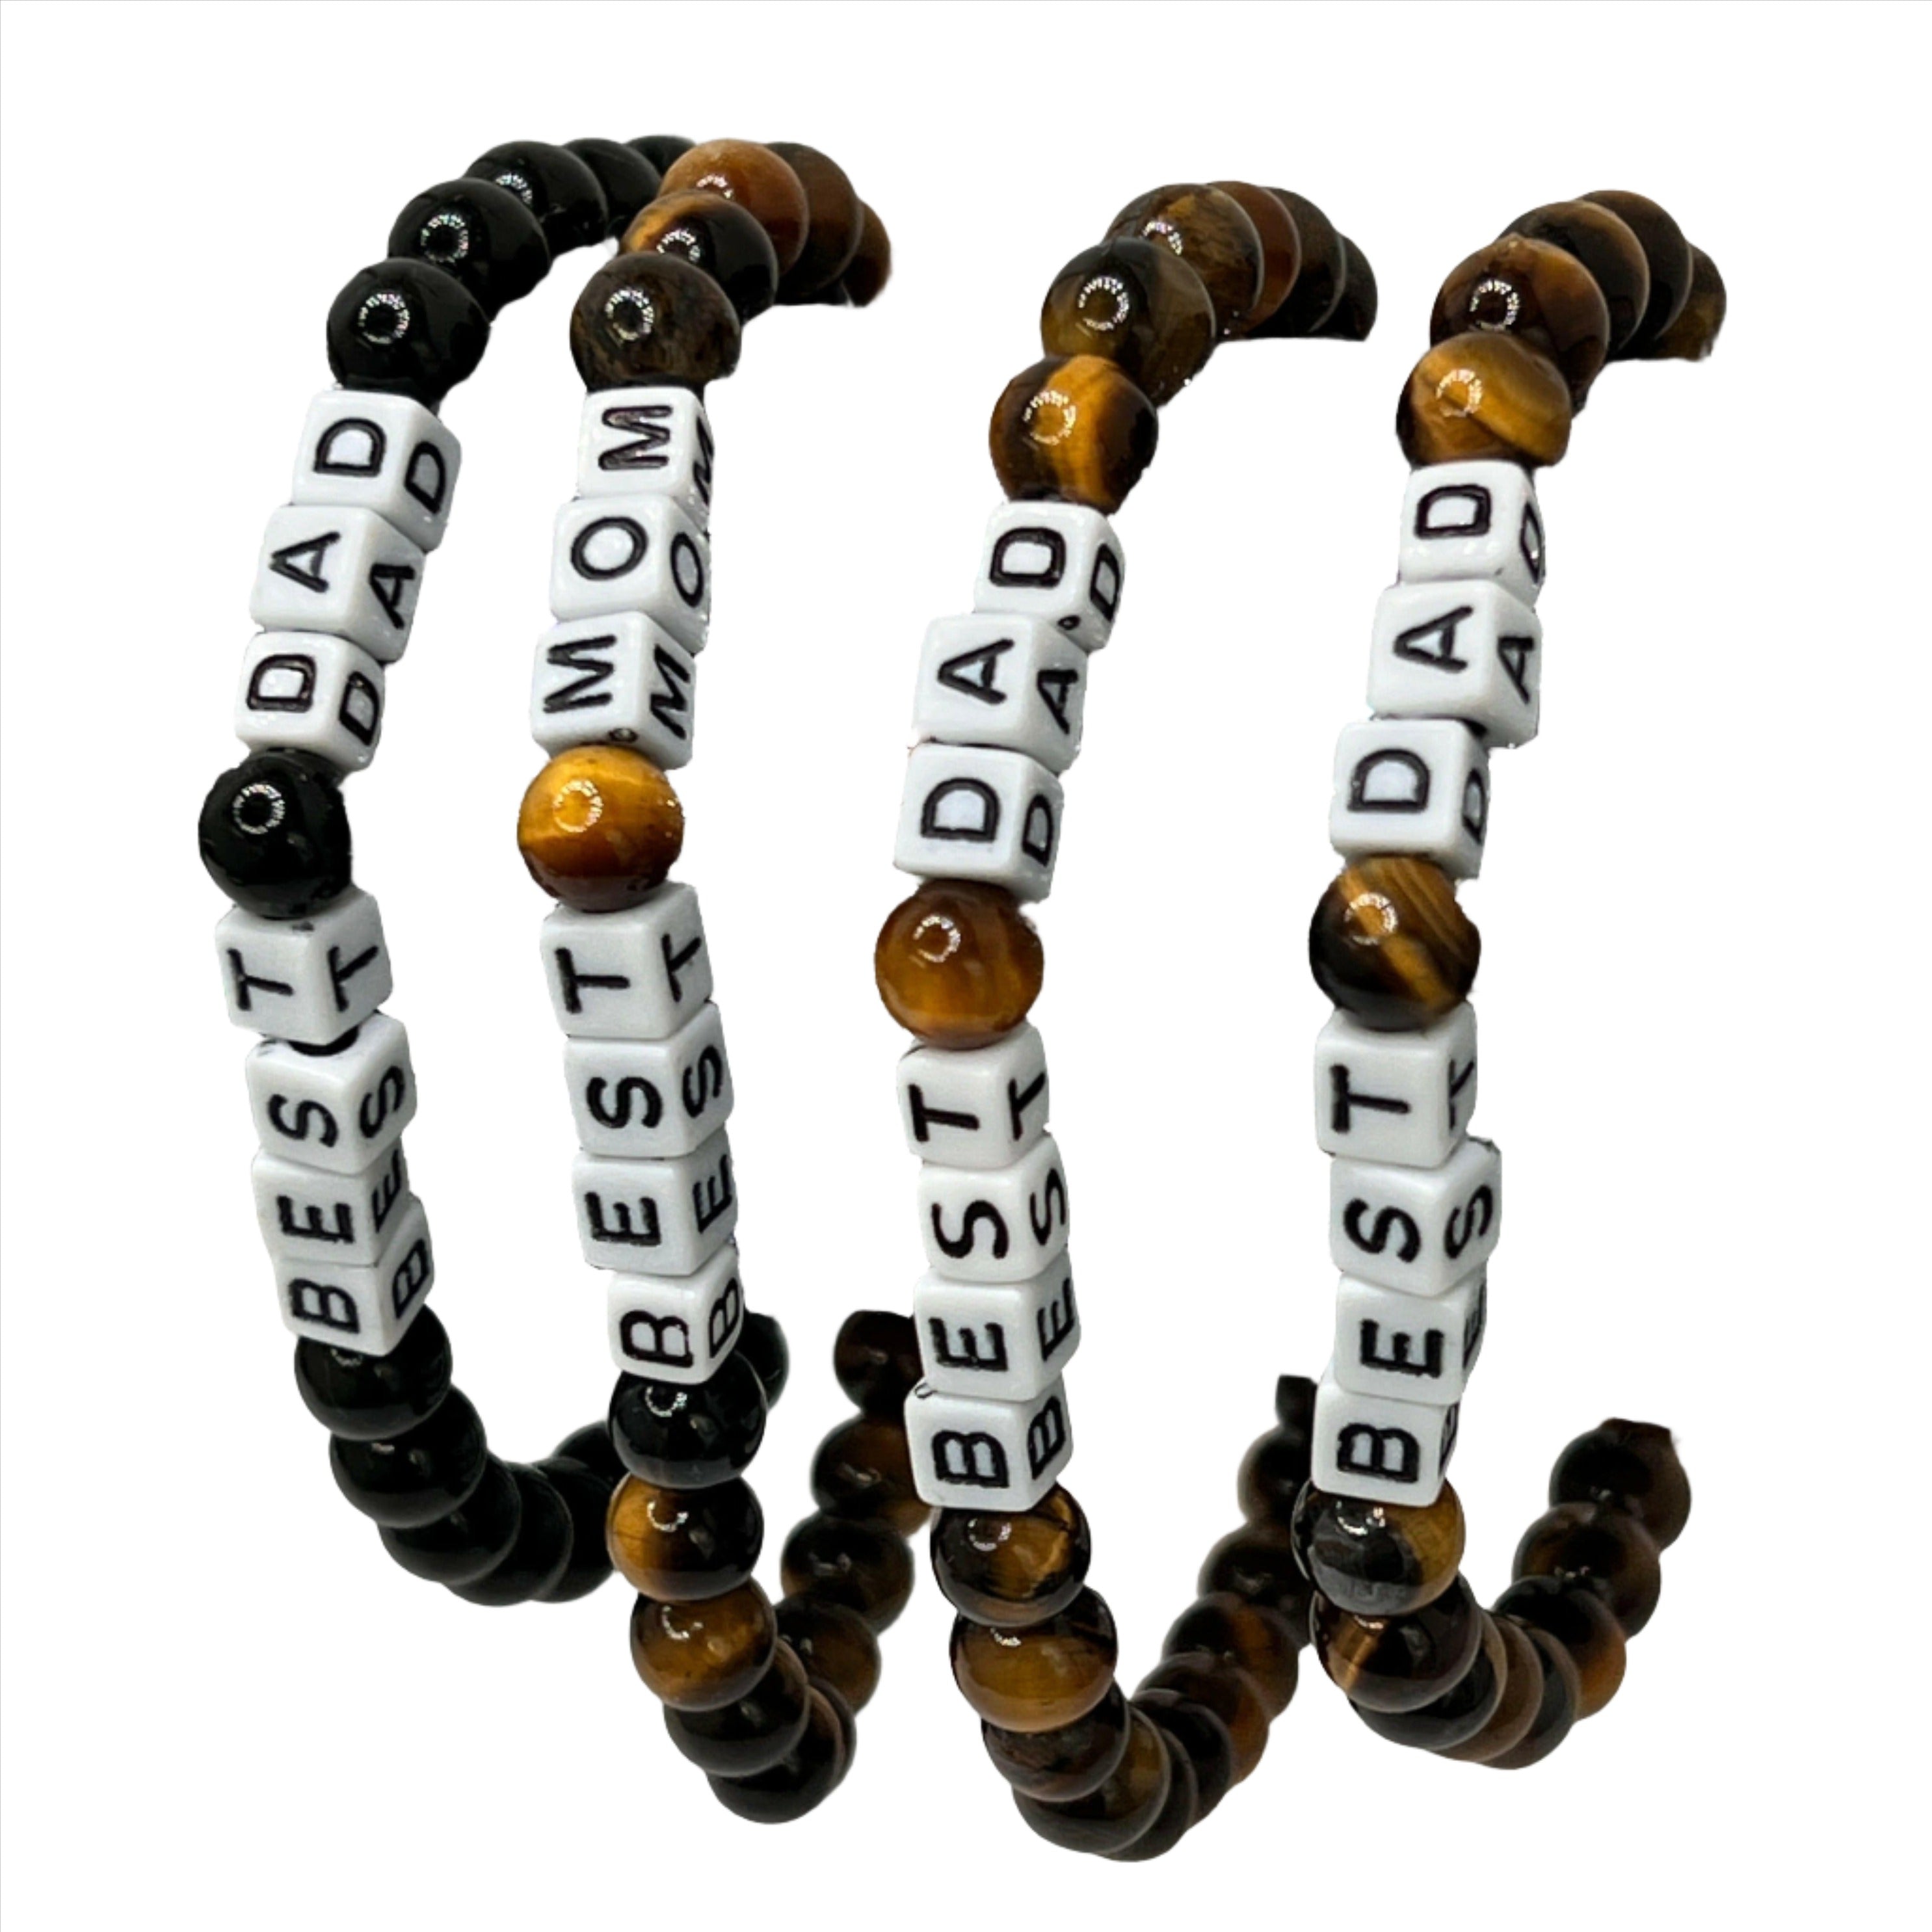 Customized gemstone bracelets for unique style statements